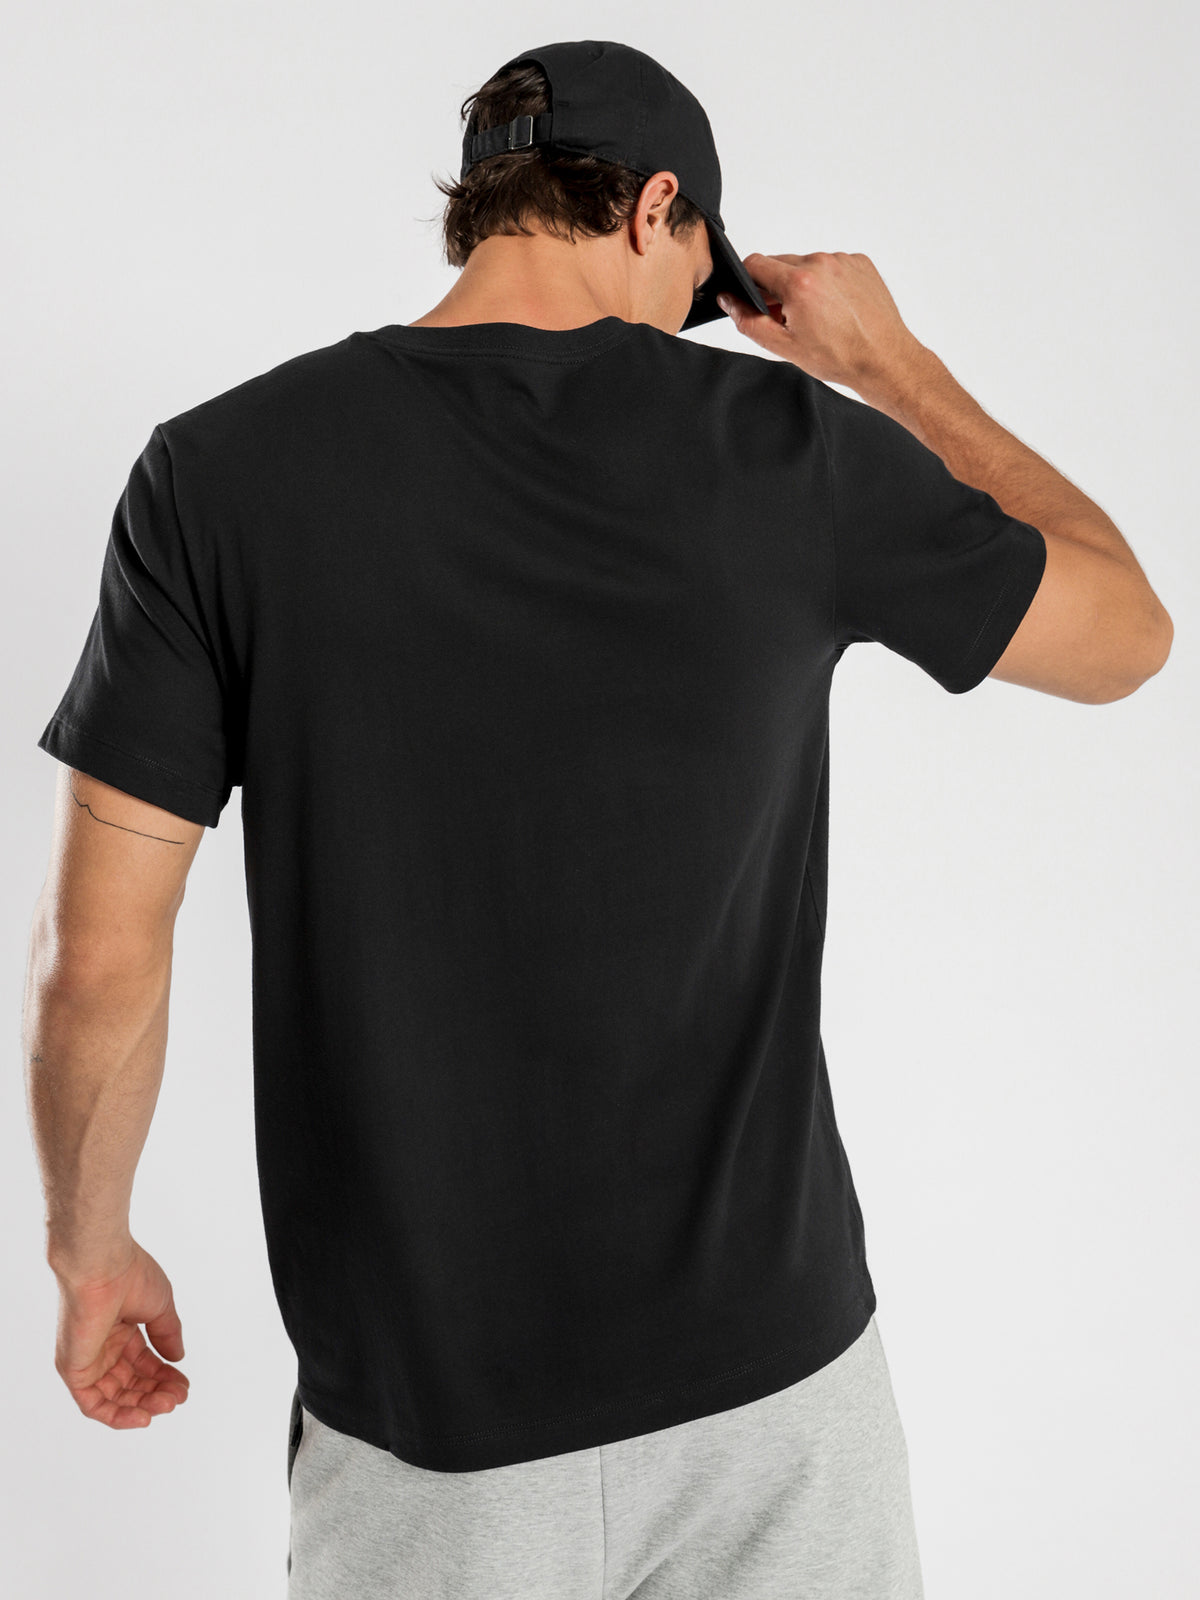 NSW JDI Bumper T-Shirt in Black